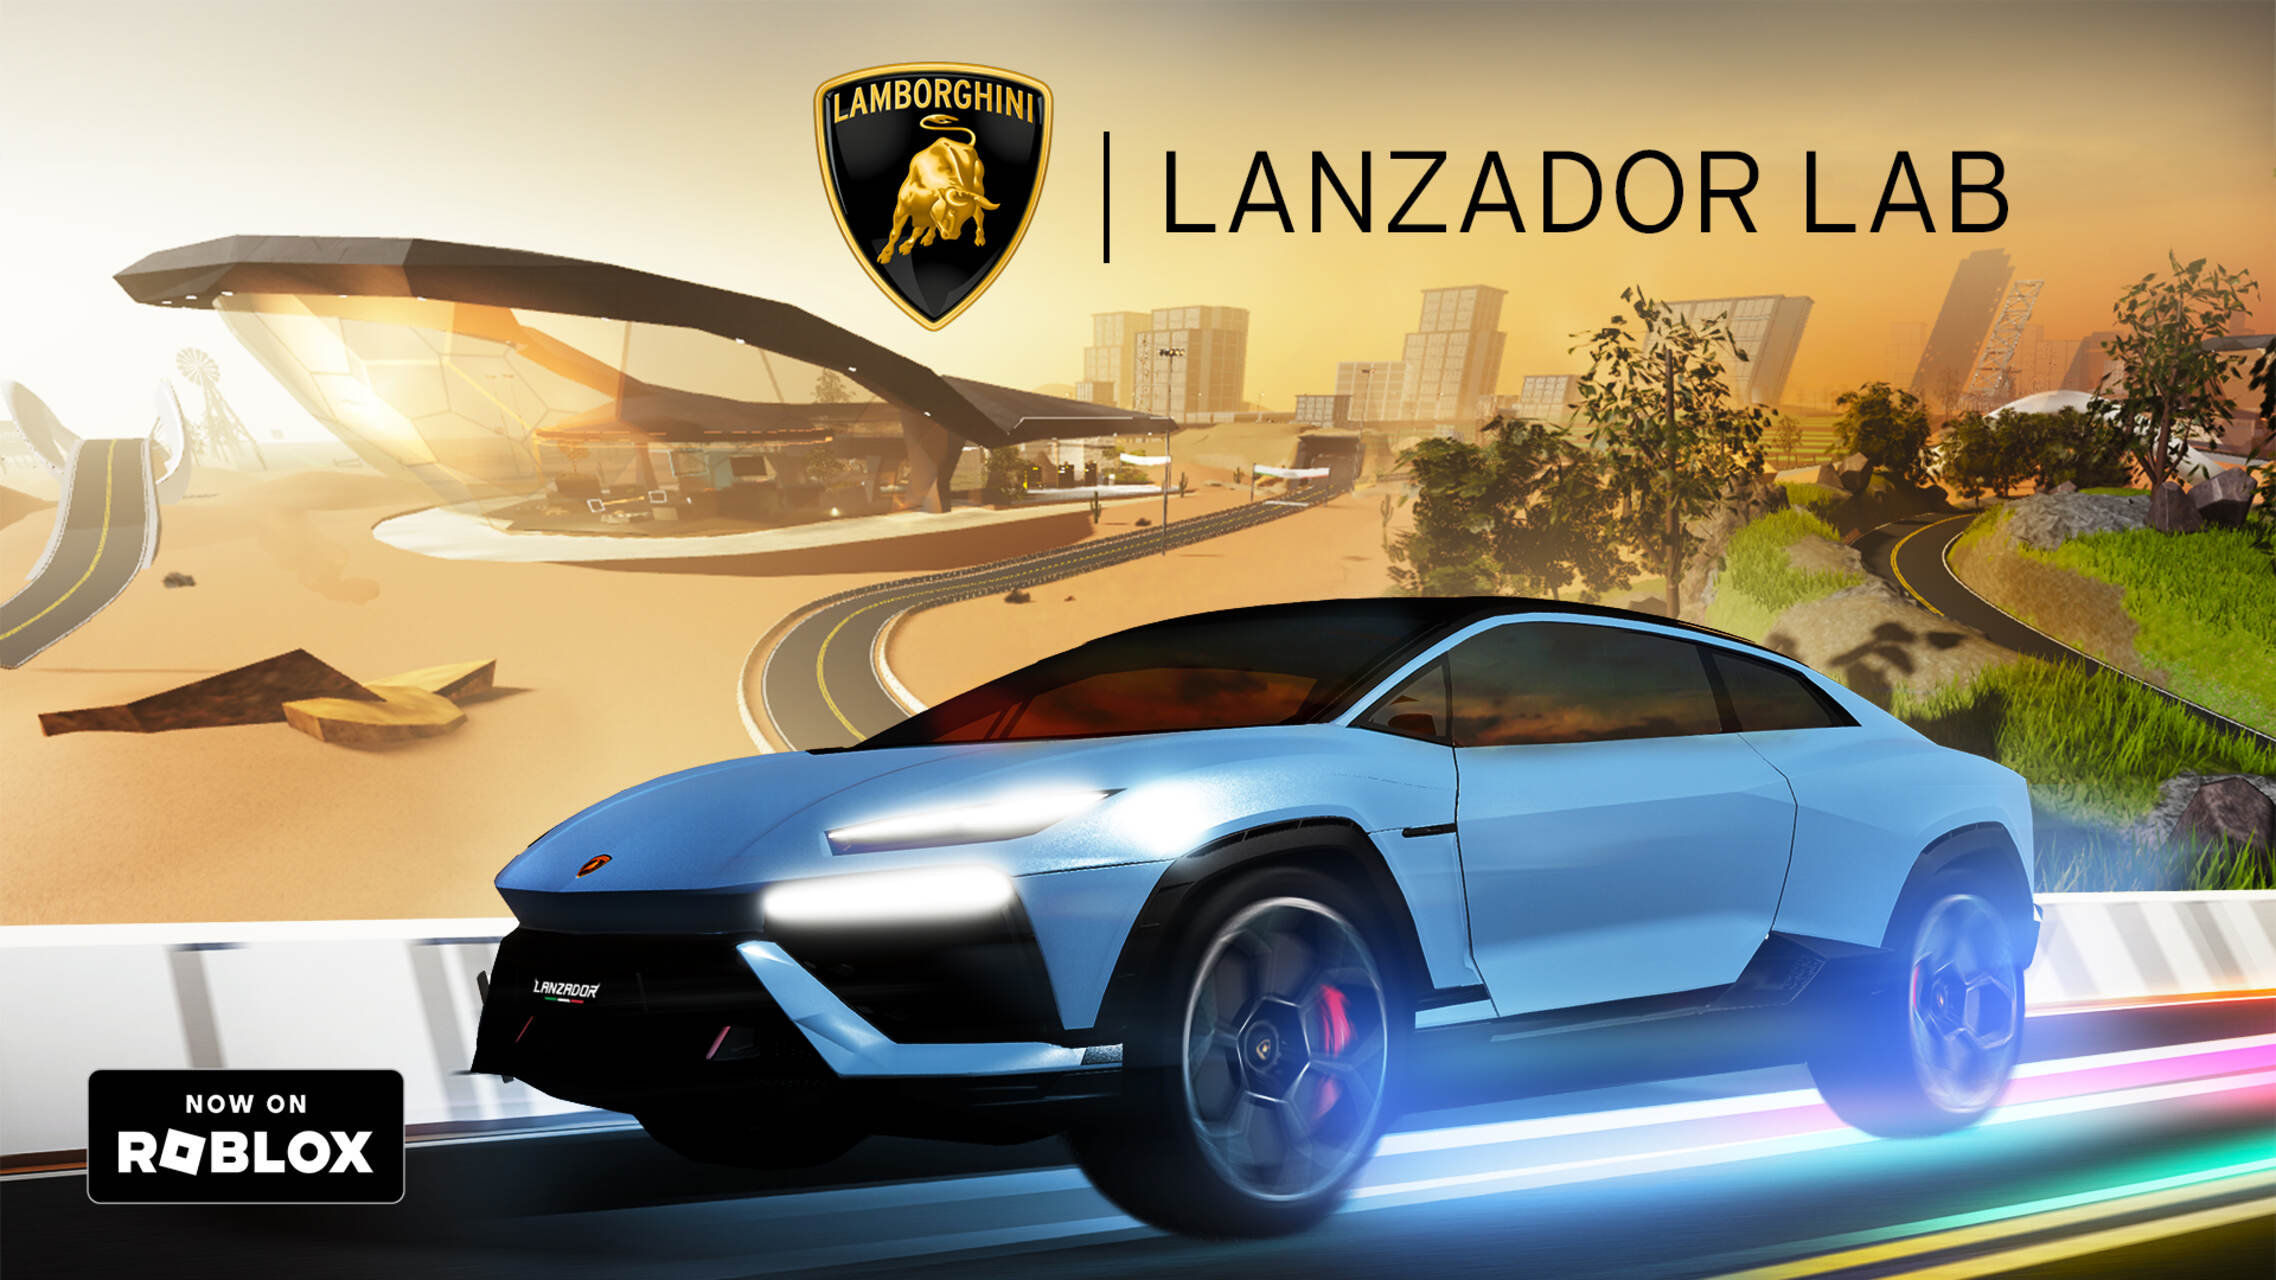 Lanzador: ລົດຊຸບເປີລົດໄຟຟ້າຂອງ Automobili Lamborghini ຢູ່ໃນ Roblox, ເປັນເວທີ 3D immersive